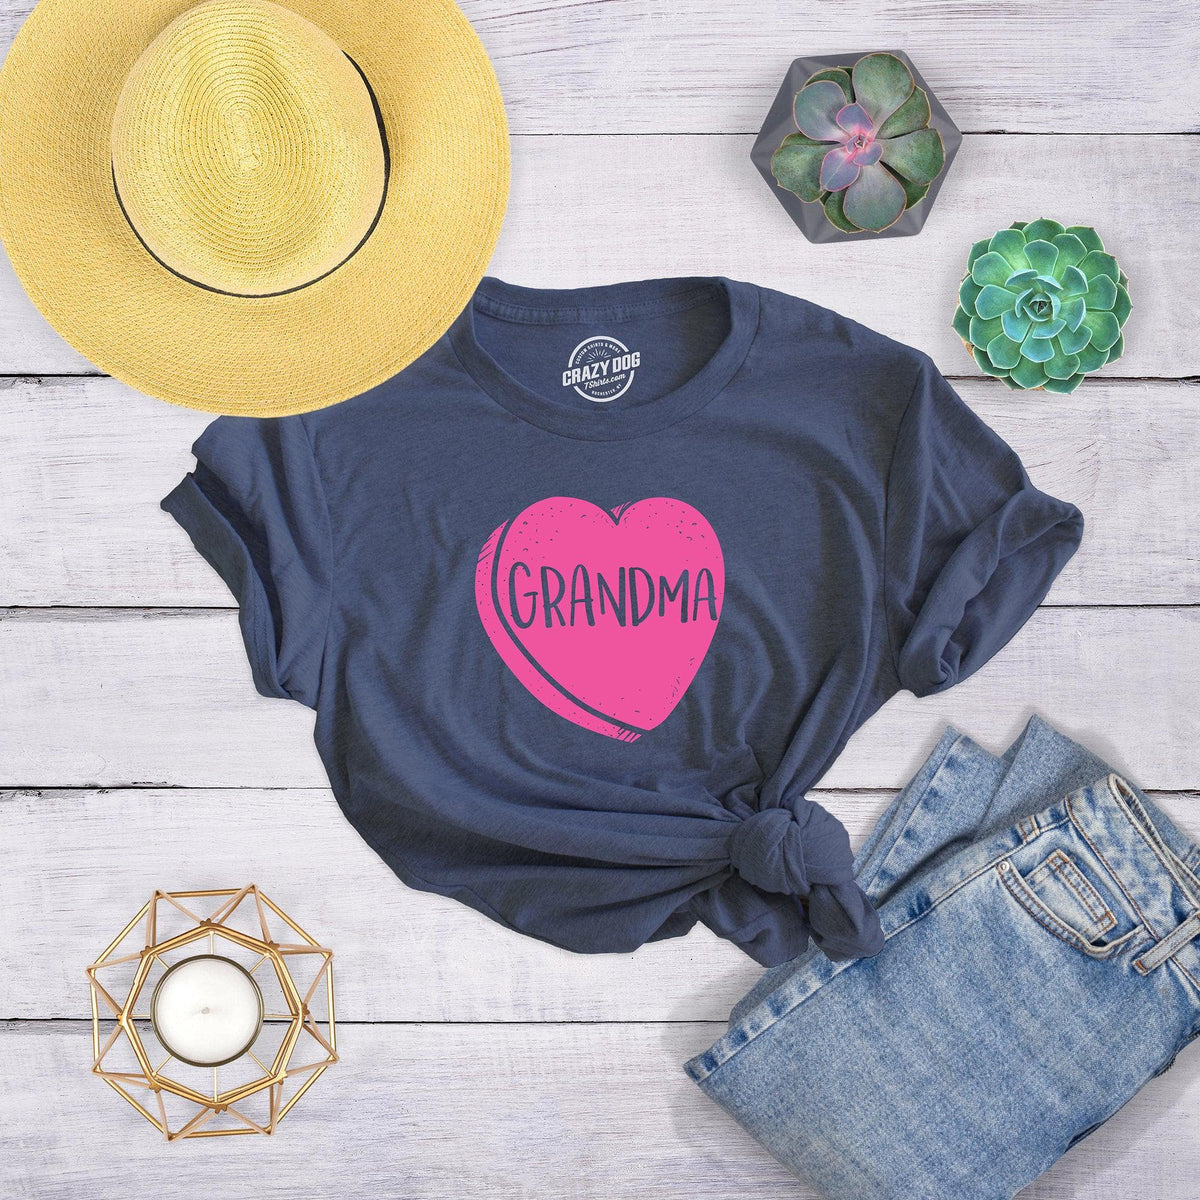 Grandma Candy Heart Women&#39;s Tshirt  -  Crazy Dog T-Shirts